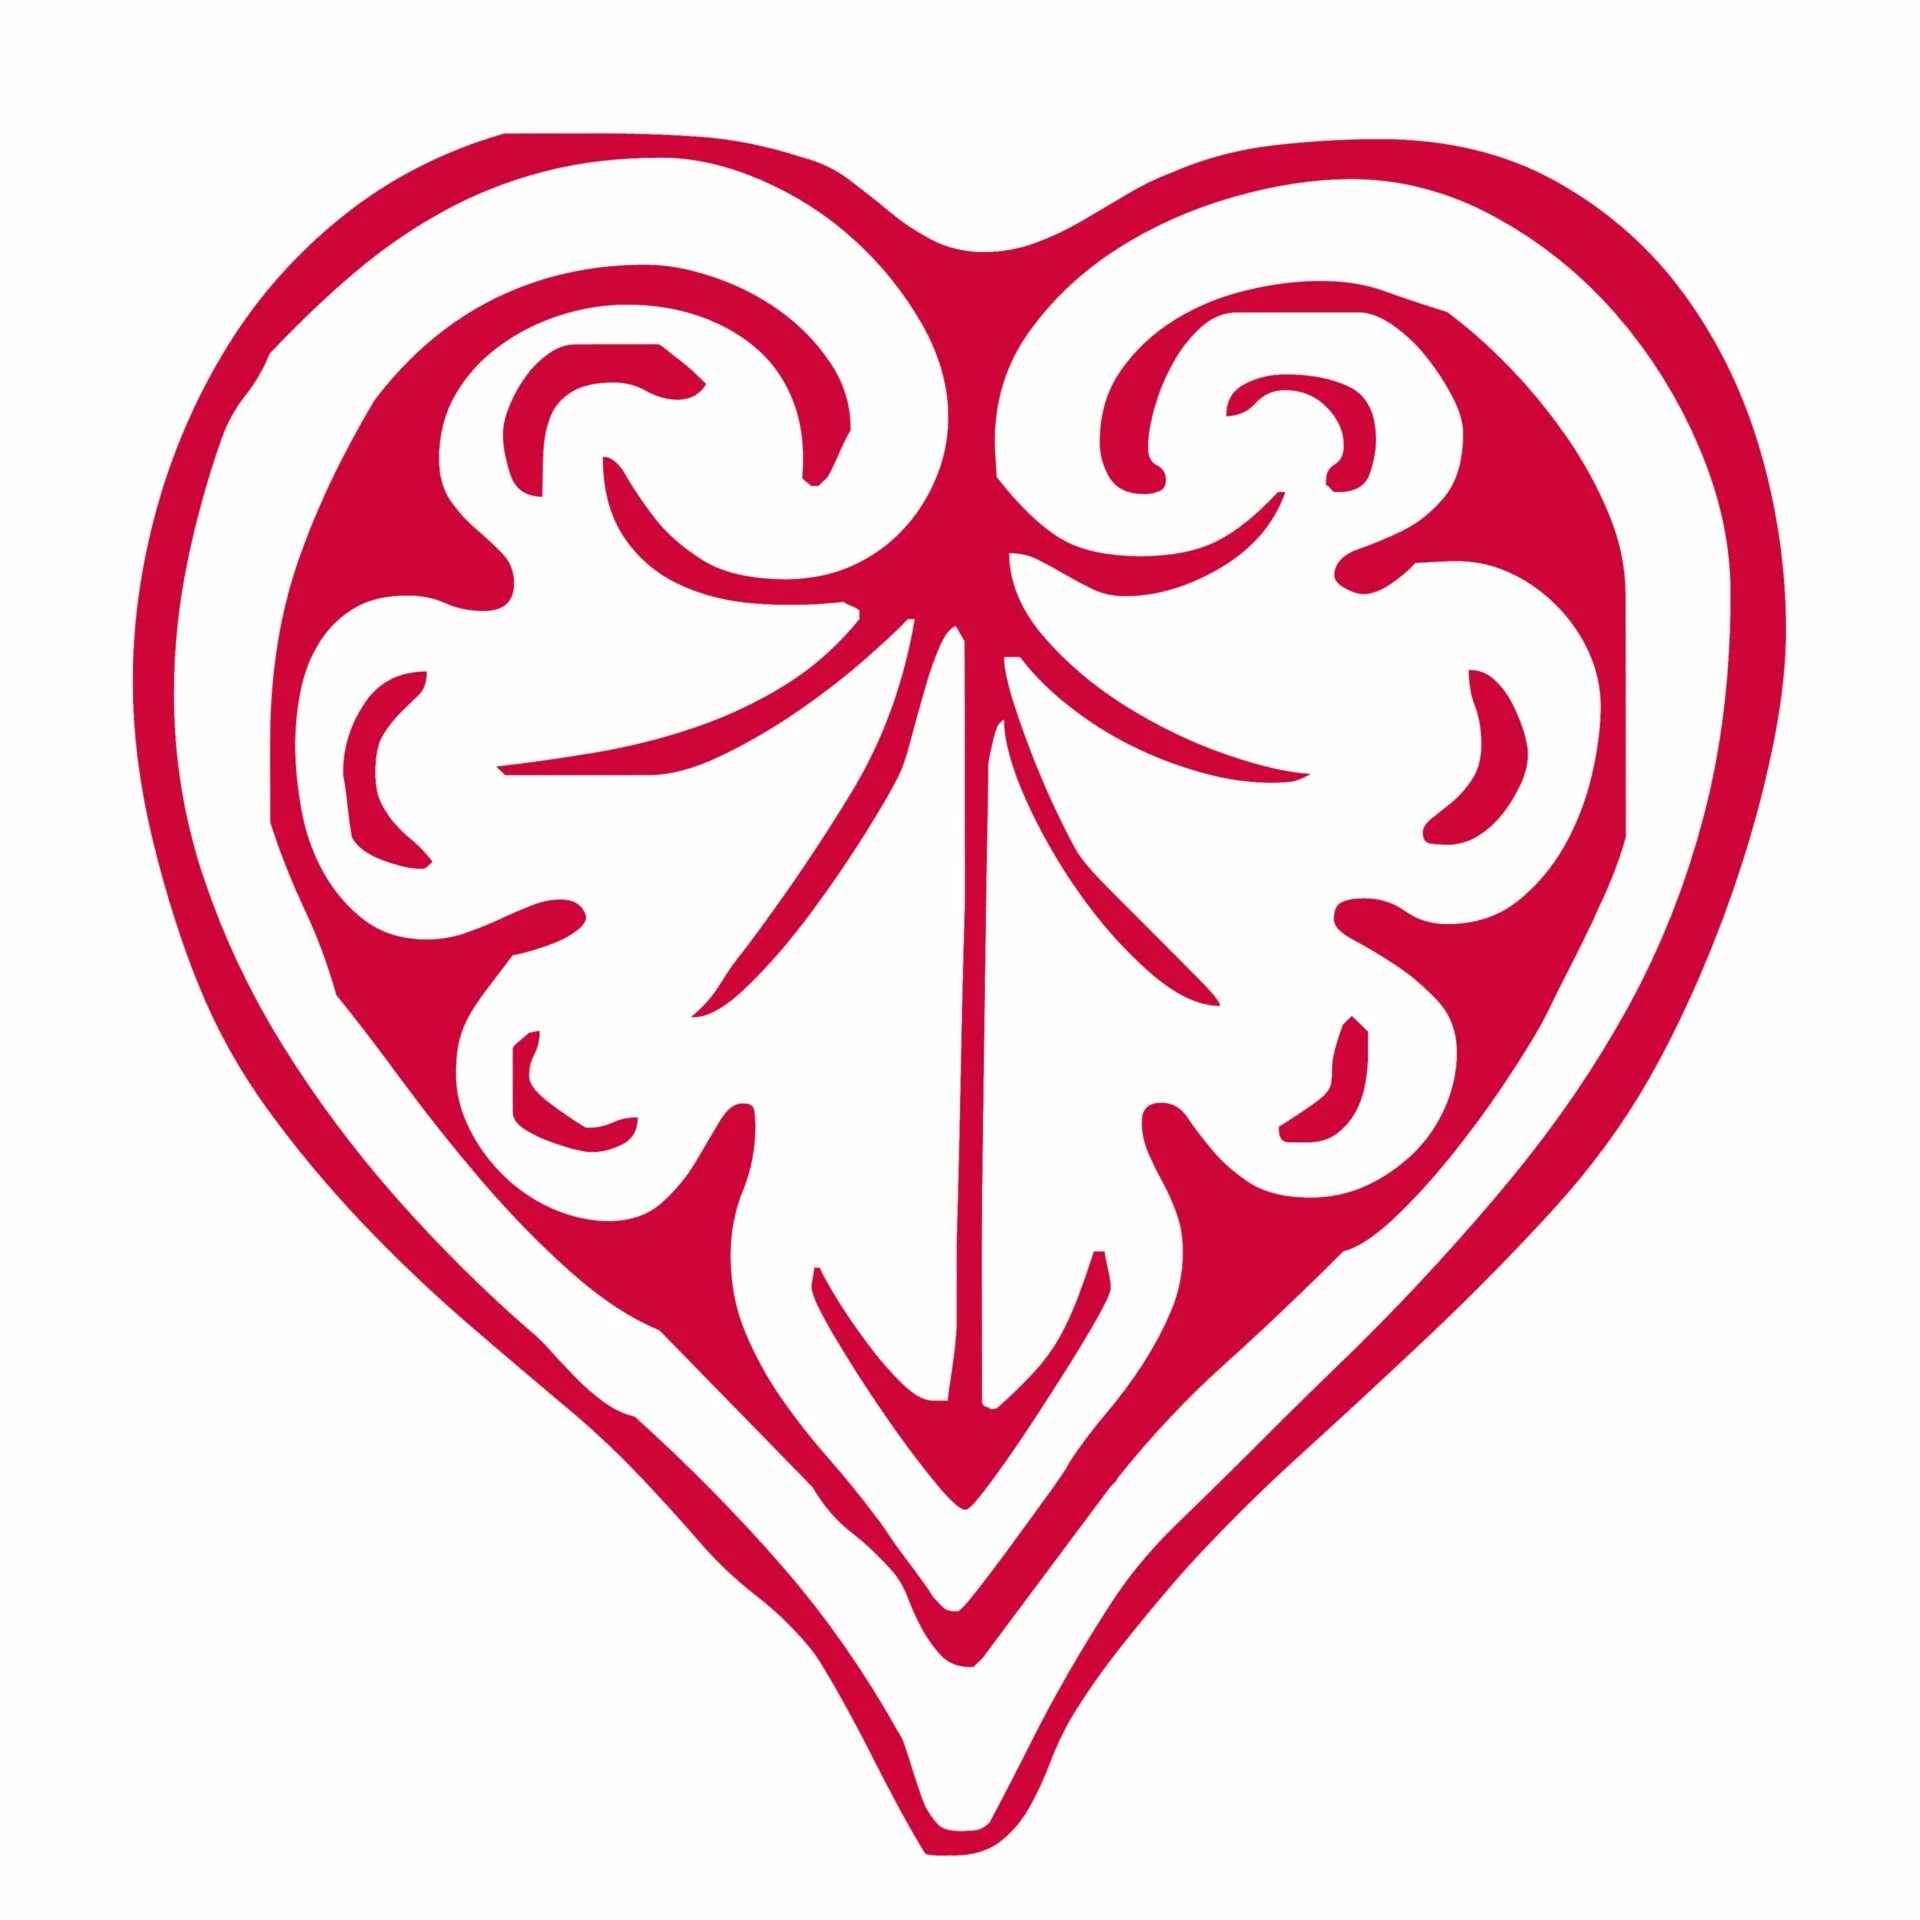 Символ влюбленности. Оригинальный символ любви. Символ любви у армян. Сердце символ любви